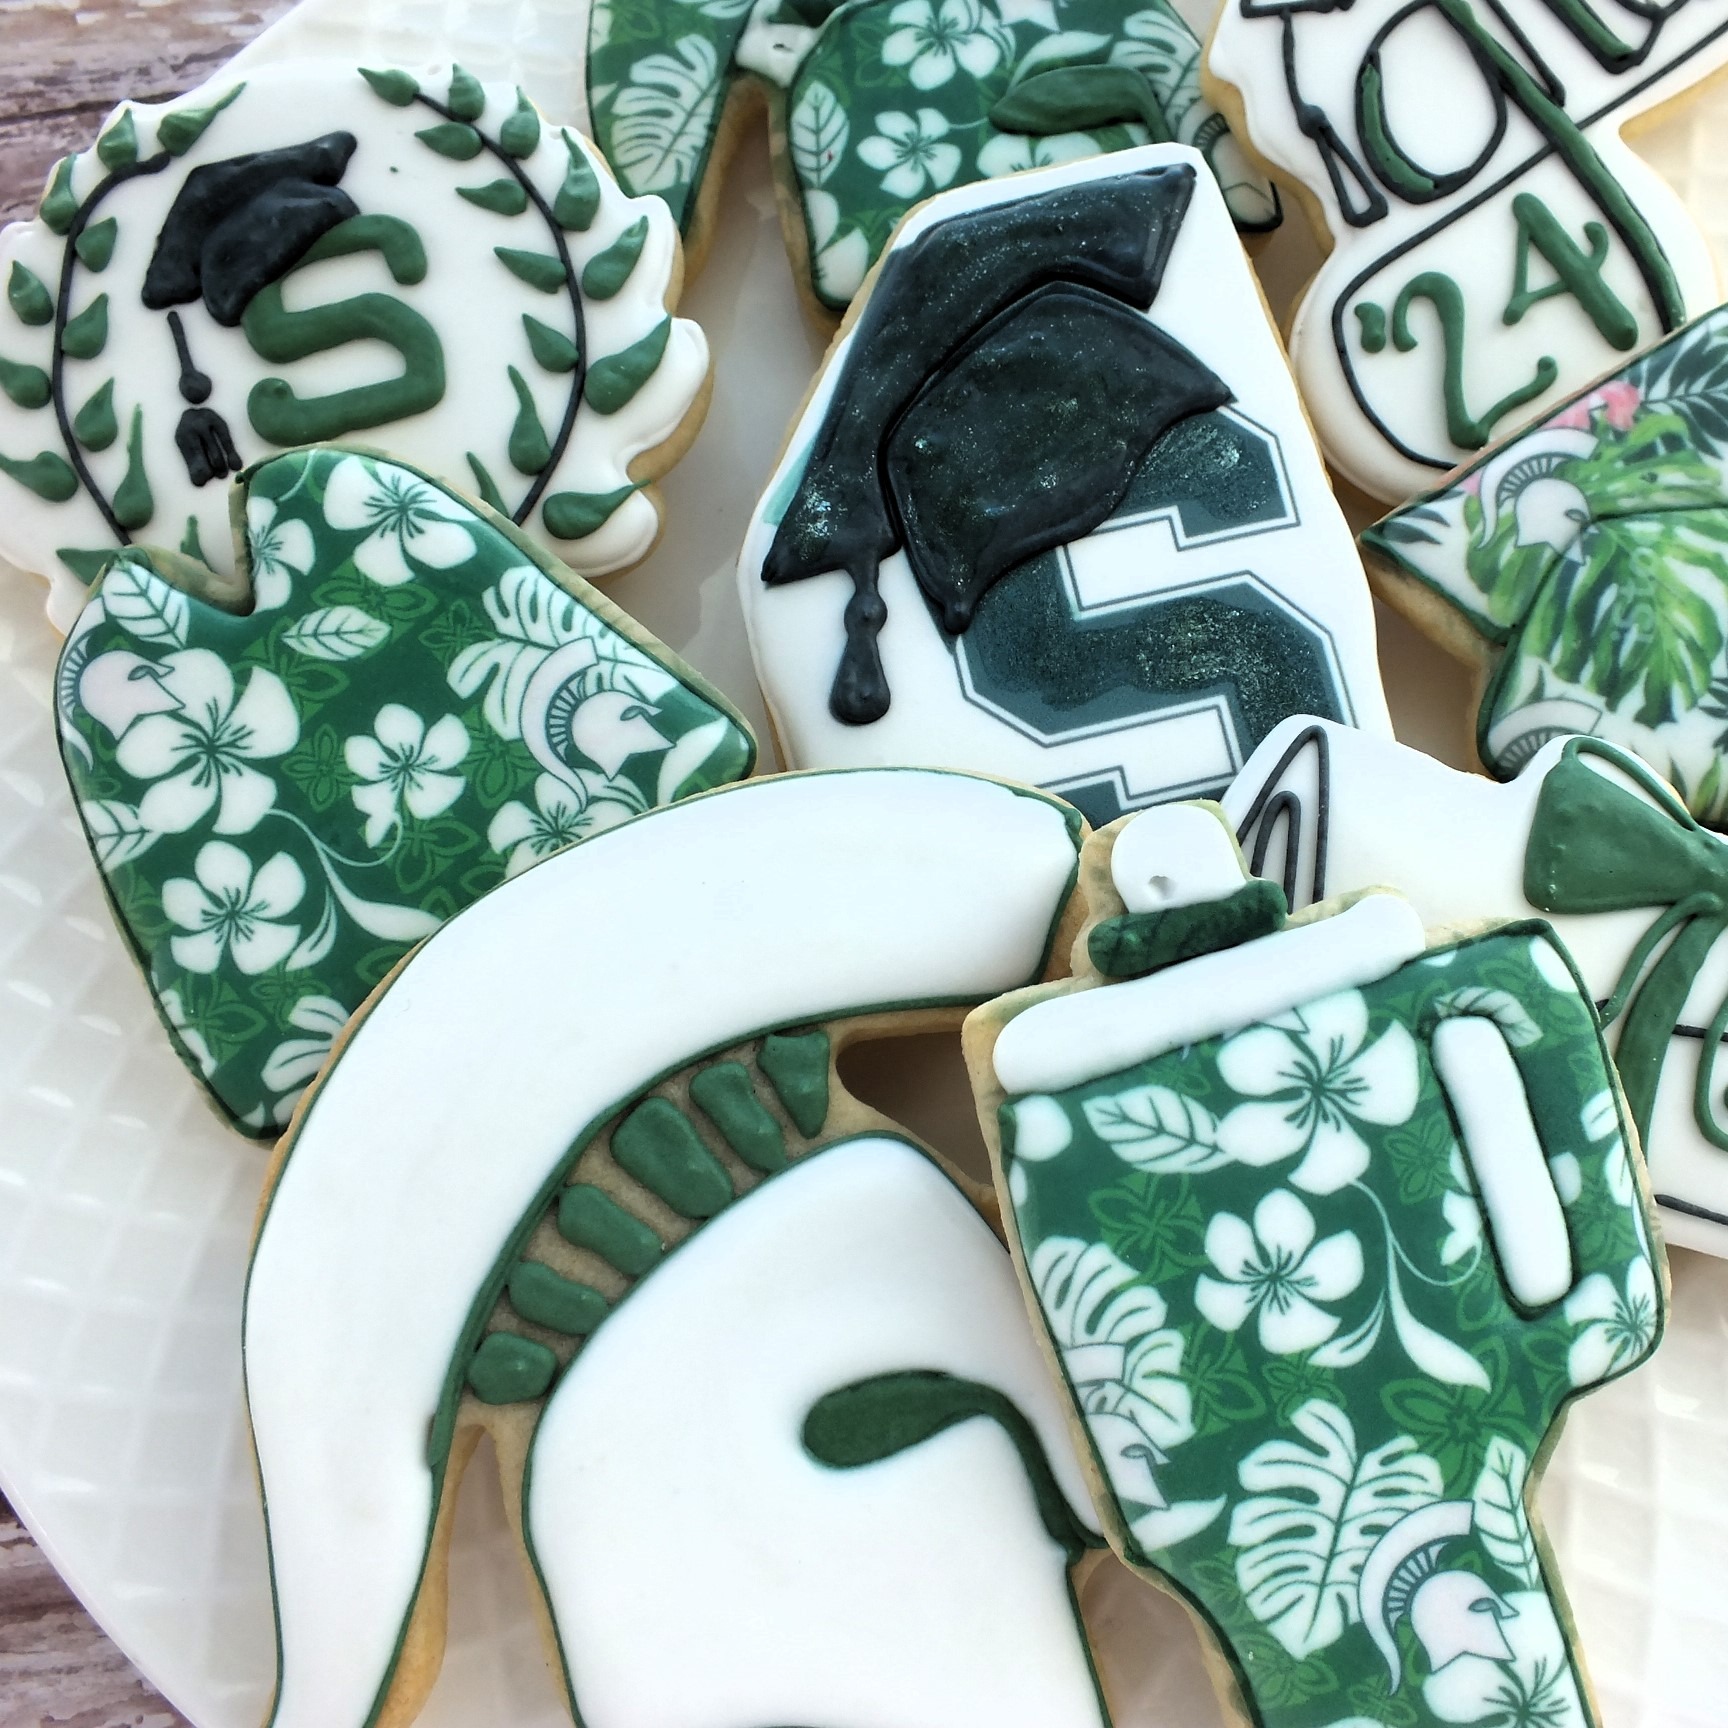 College Graduation Decorated Cookies